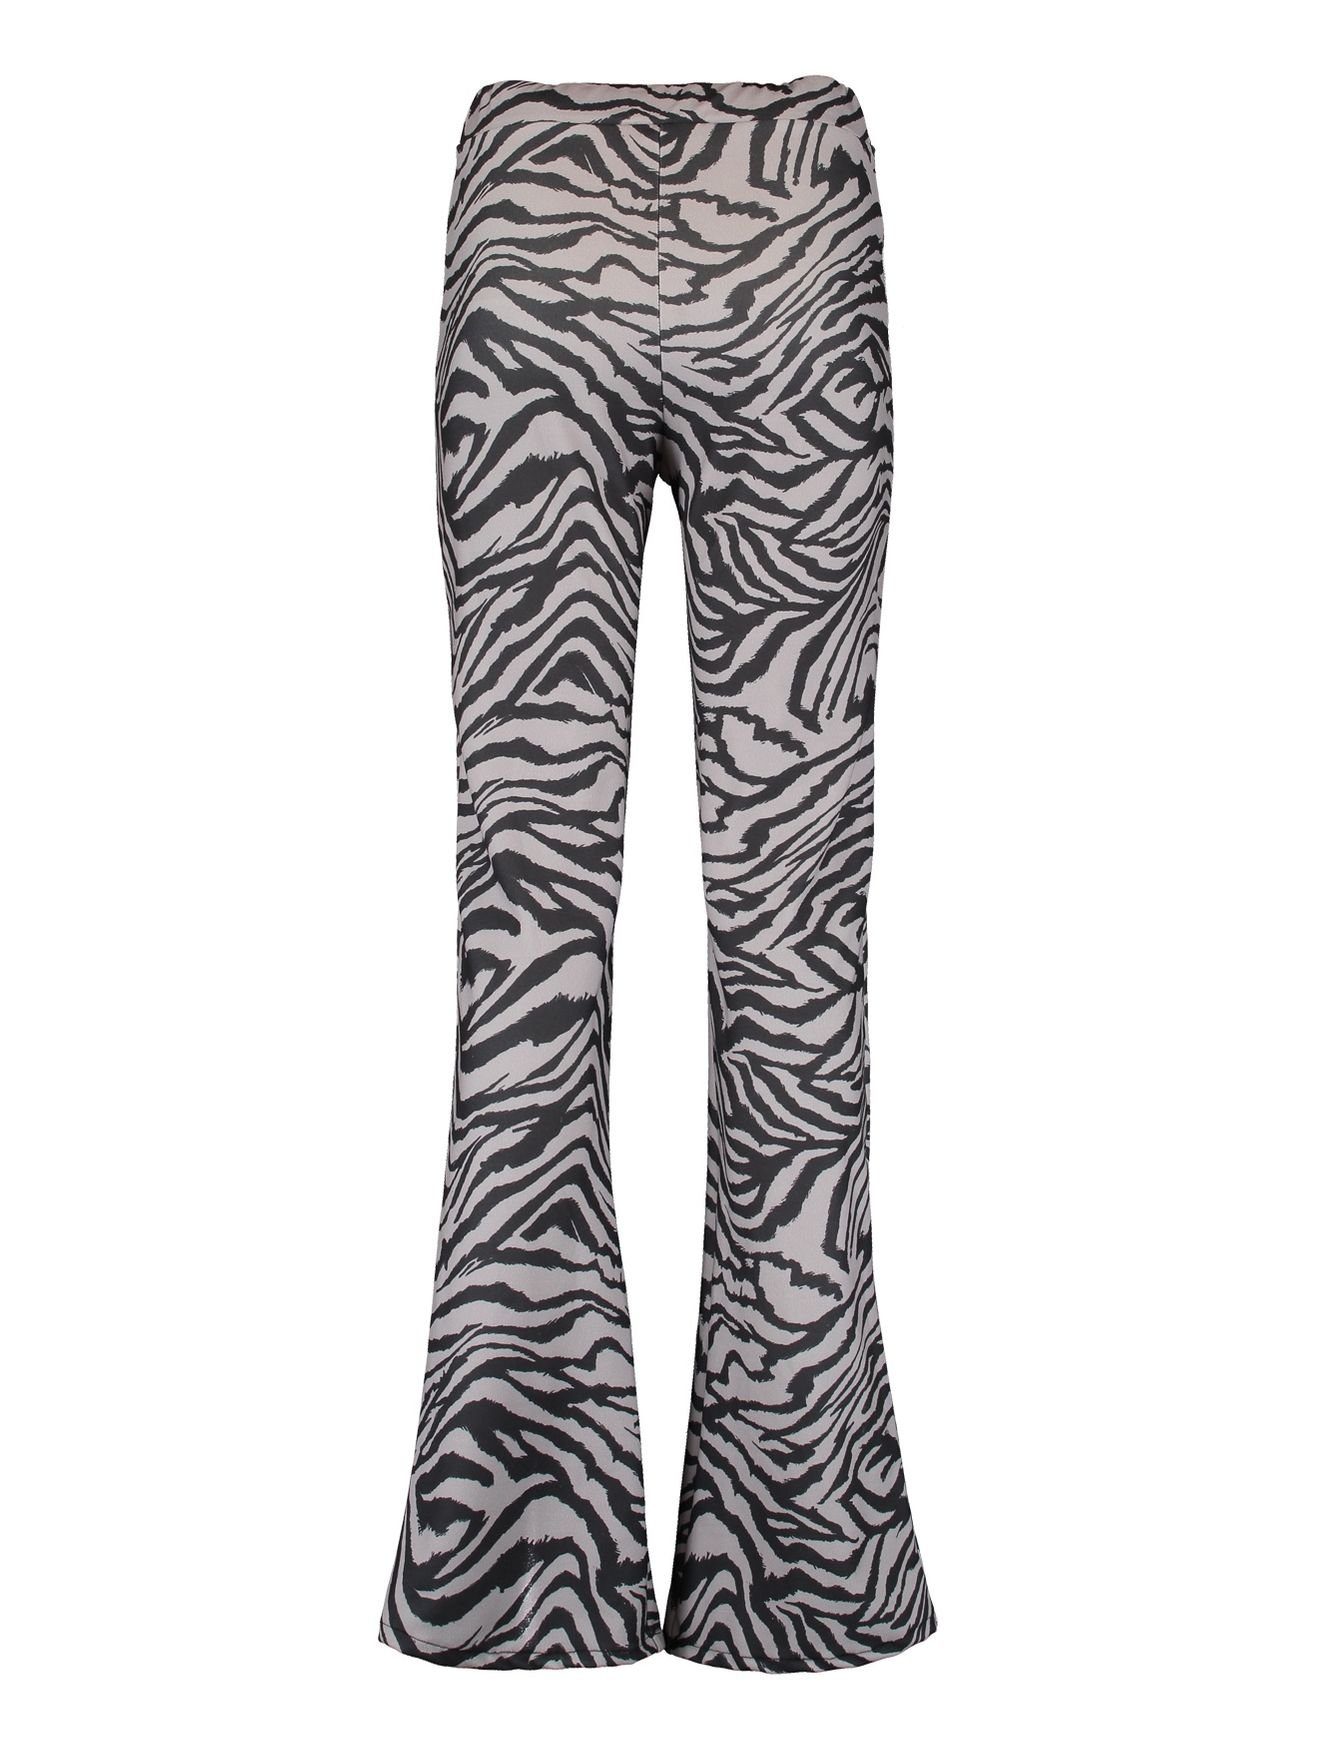 HaILY\'S Stoffhose Print Stoff Zebra Flared Sinka Animal Leggings Bootcut in Grau Hose 5073